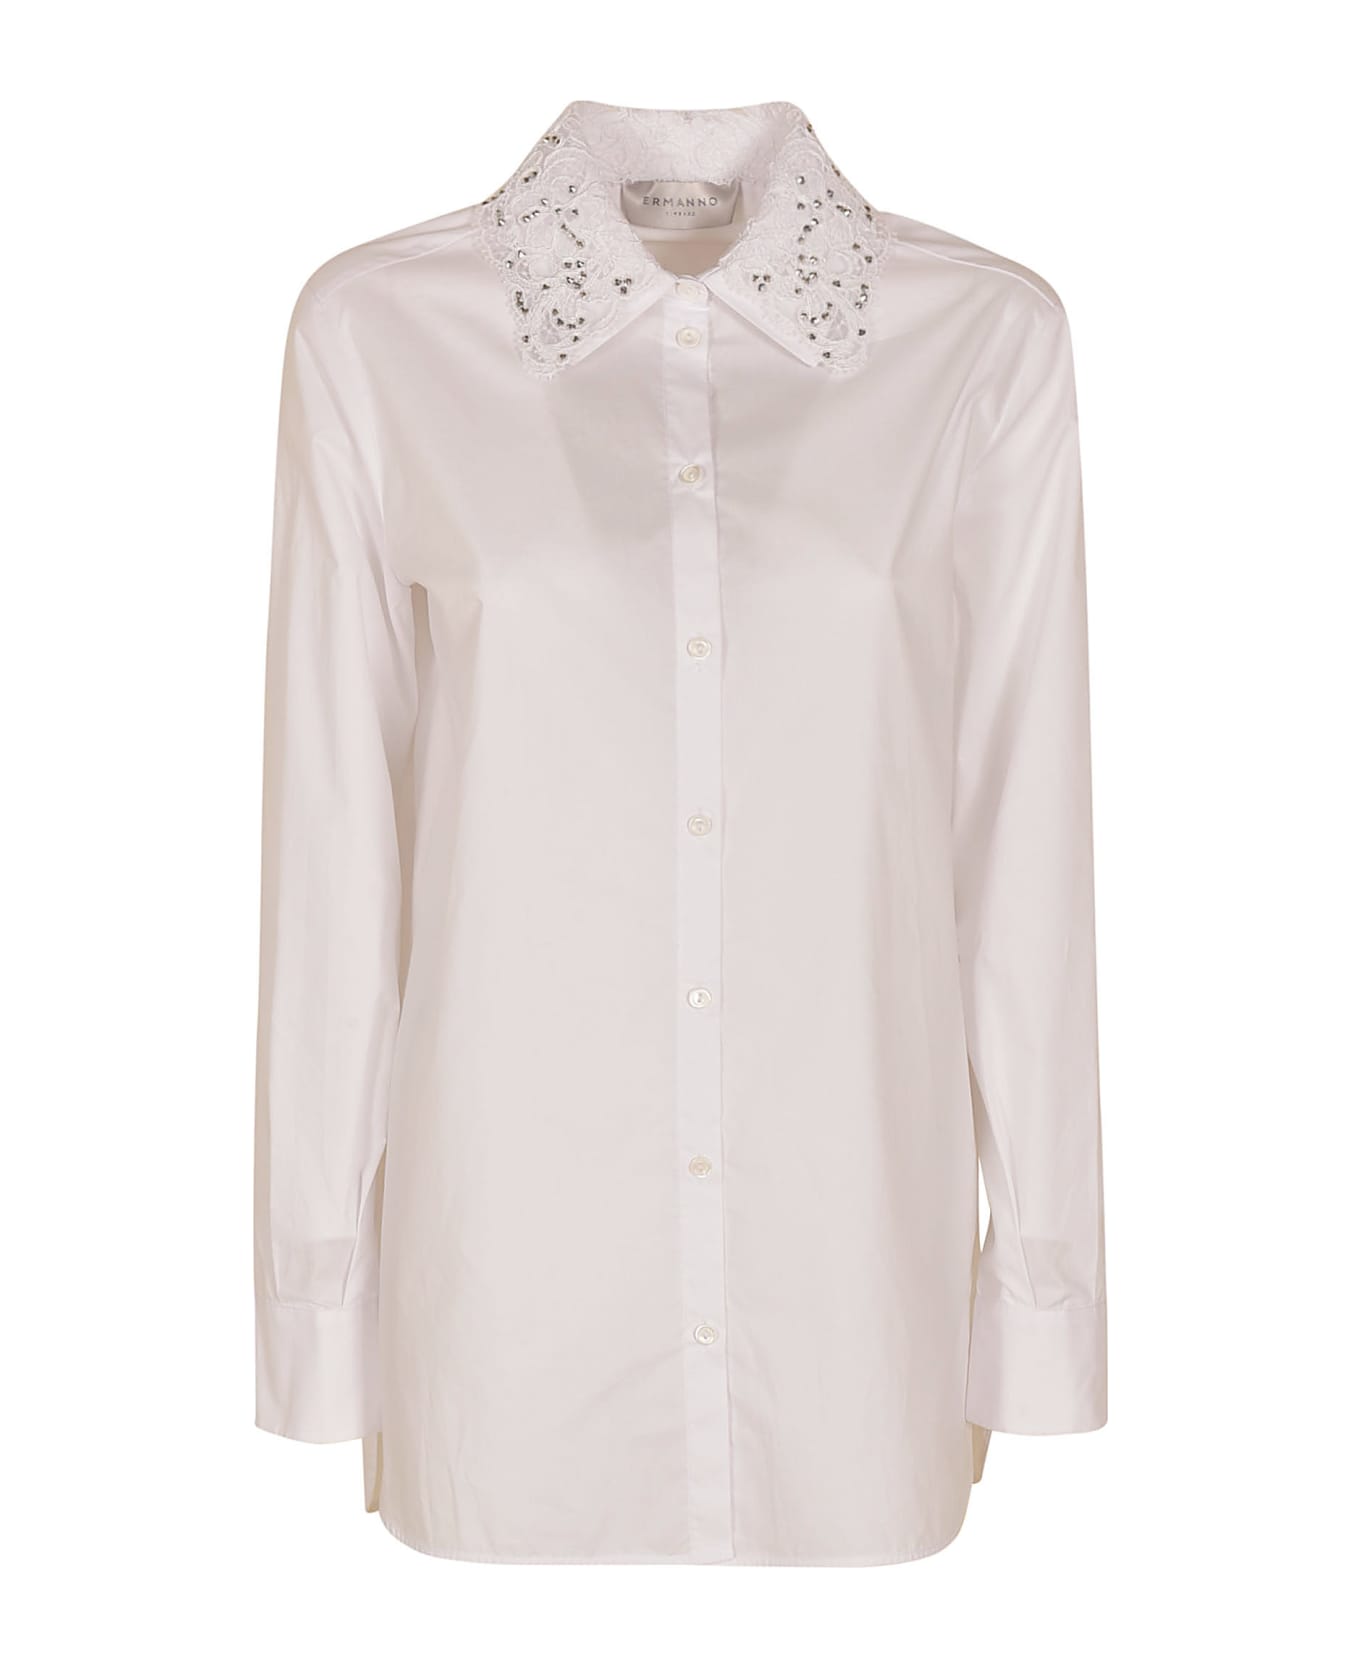 Ermanno Scervino Embellished Collar Plain Shirt - White